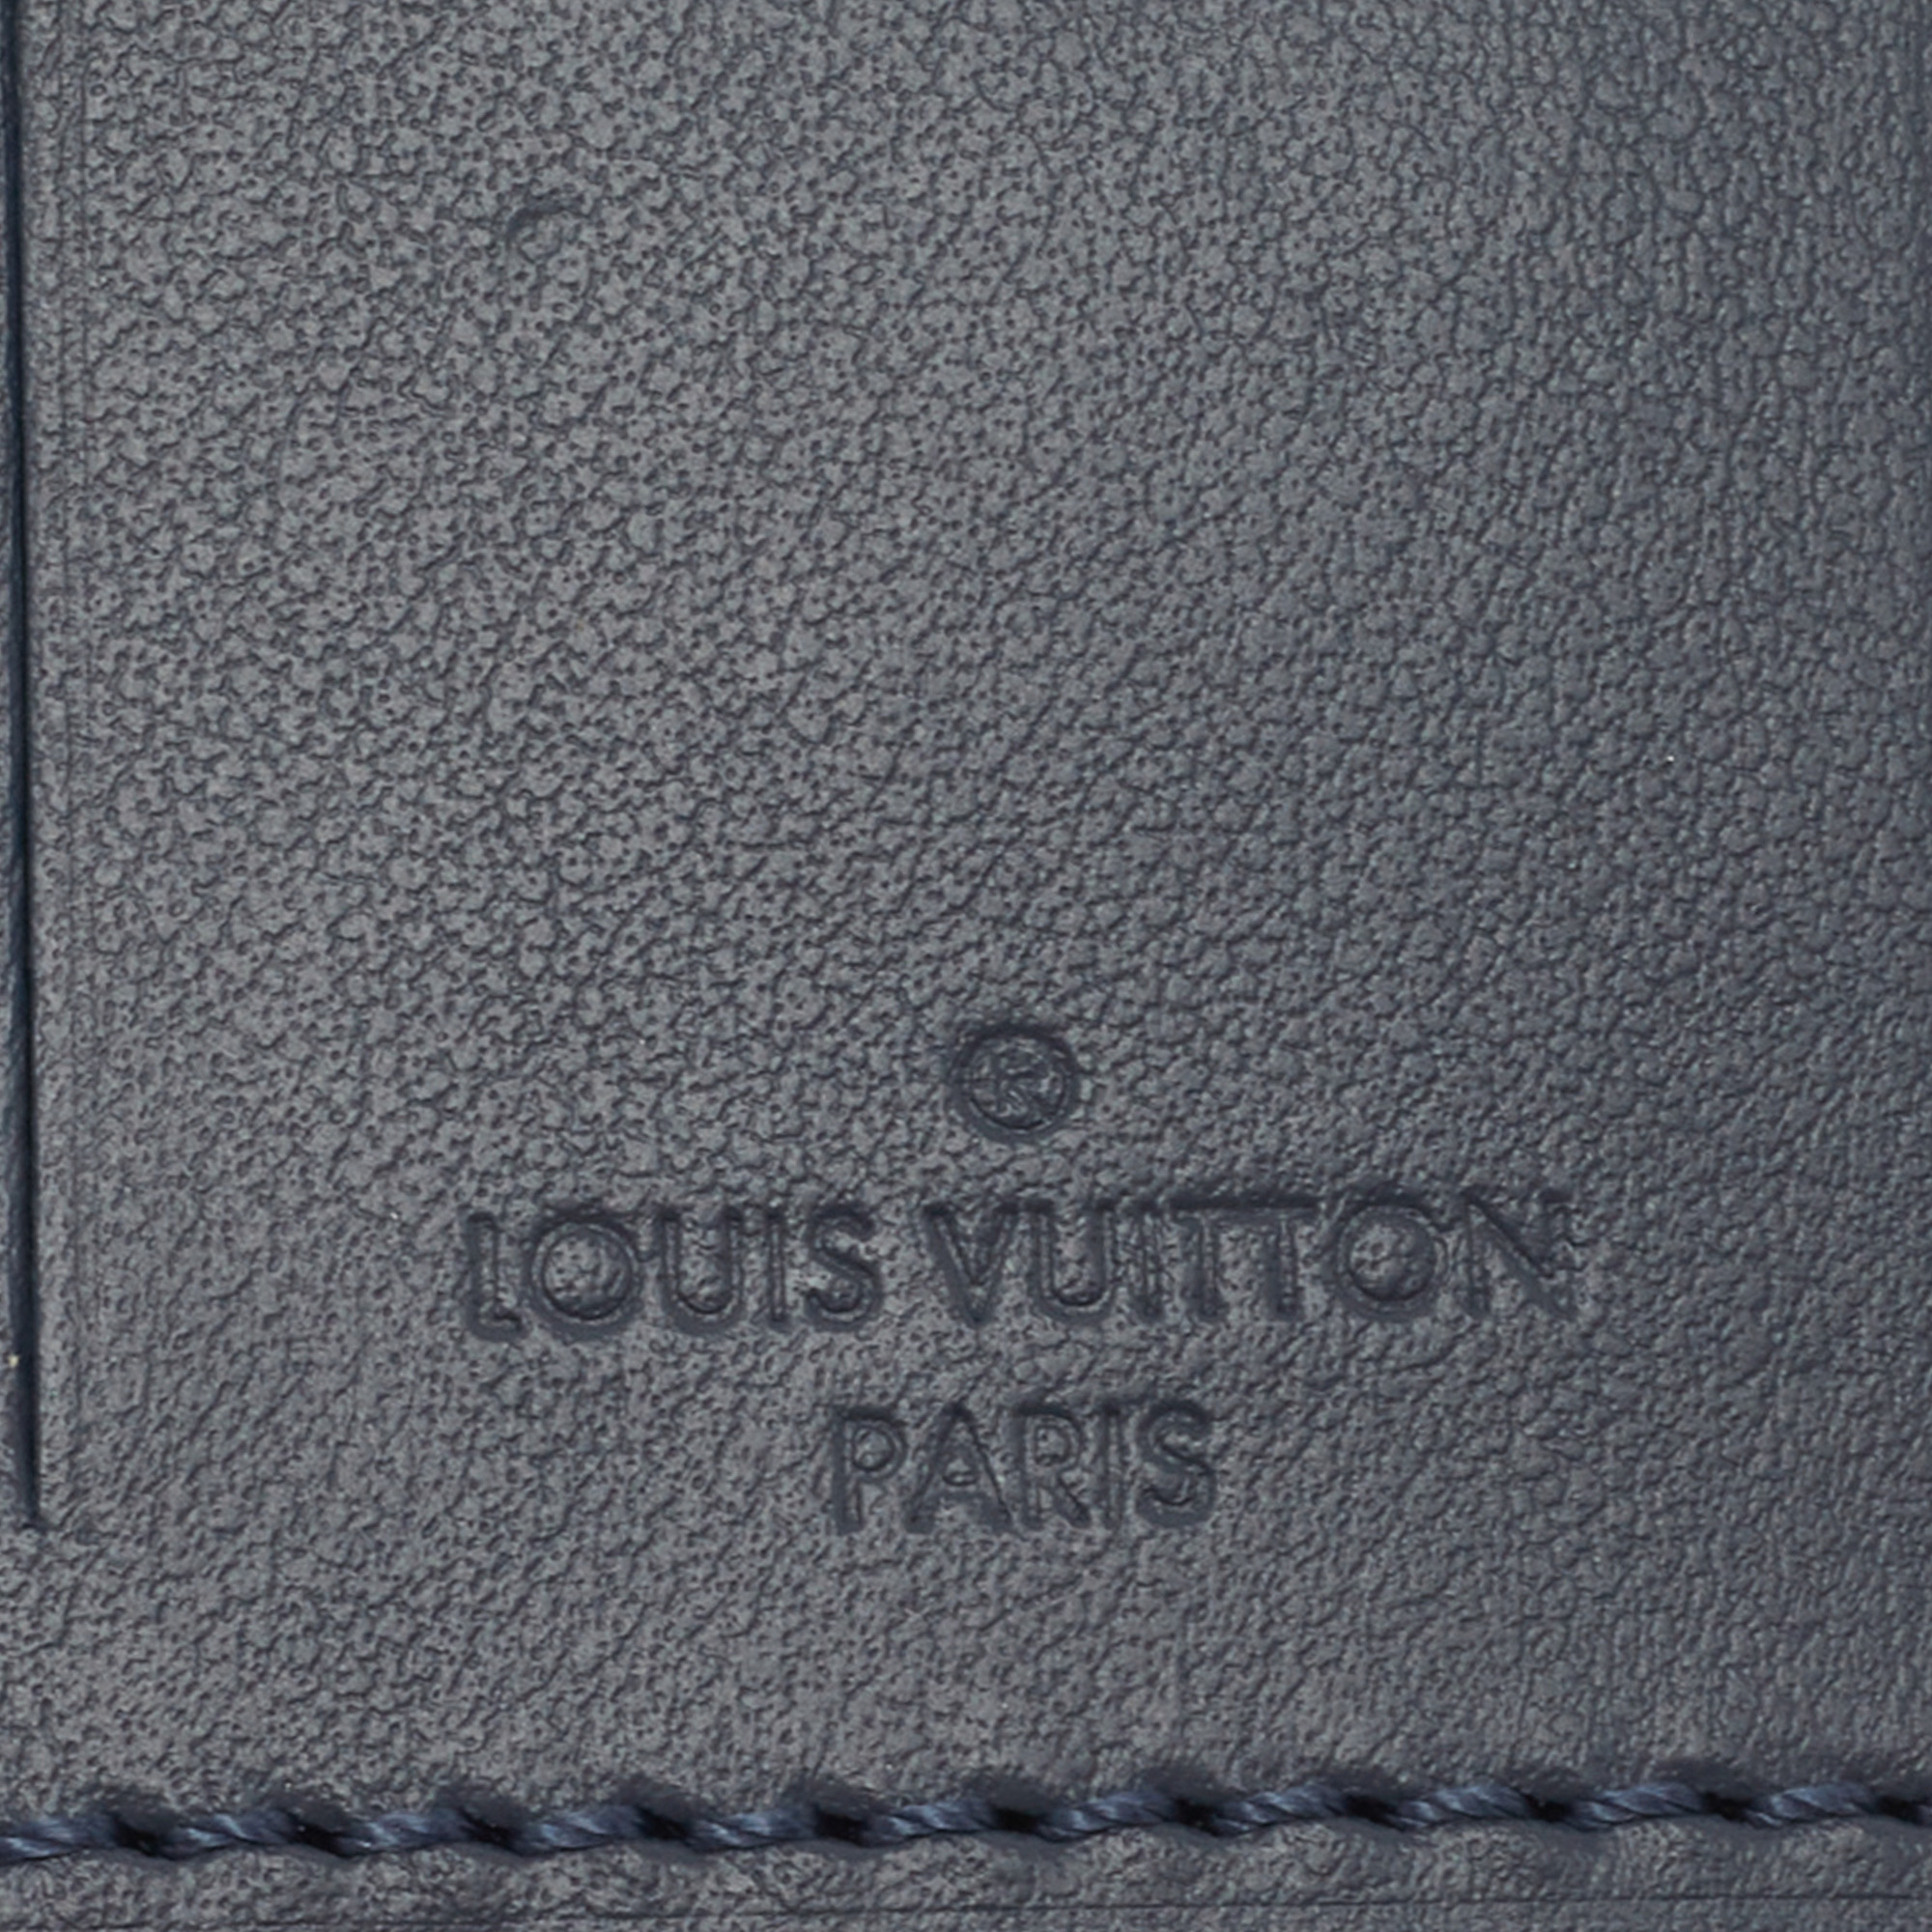 Louis Vuitton Blue Leather Luggage Name Tag